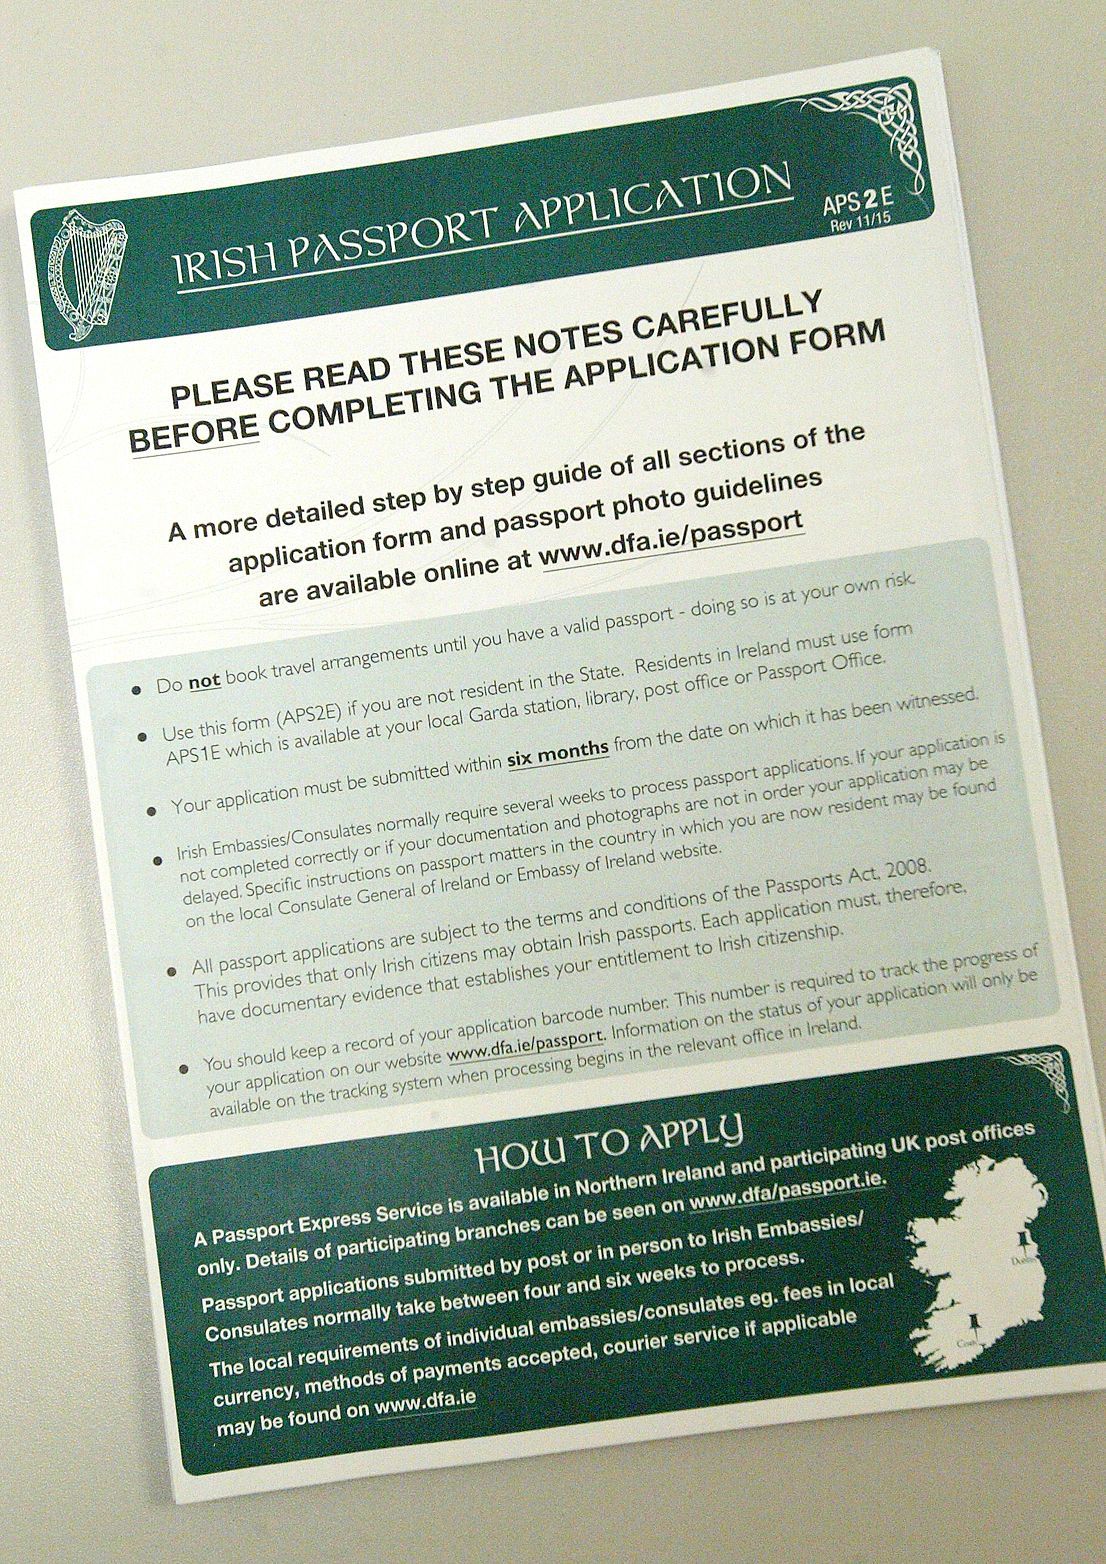 Irish passport office desperately needed in the North